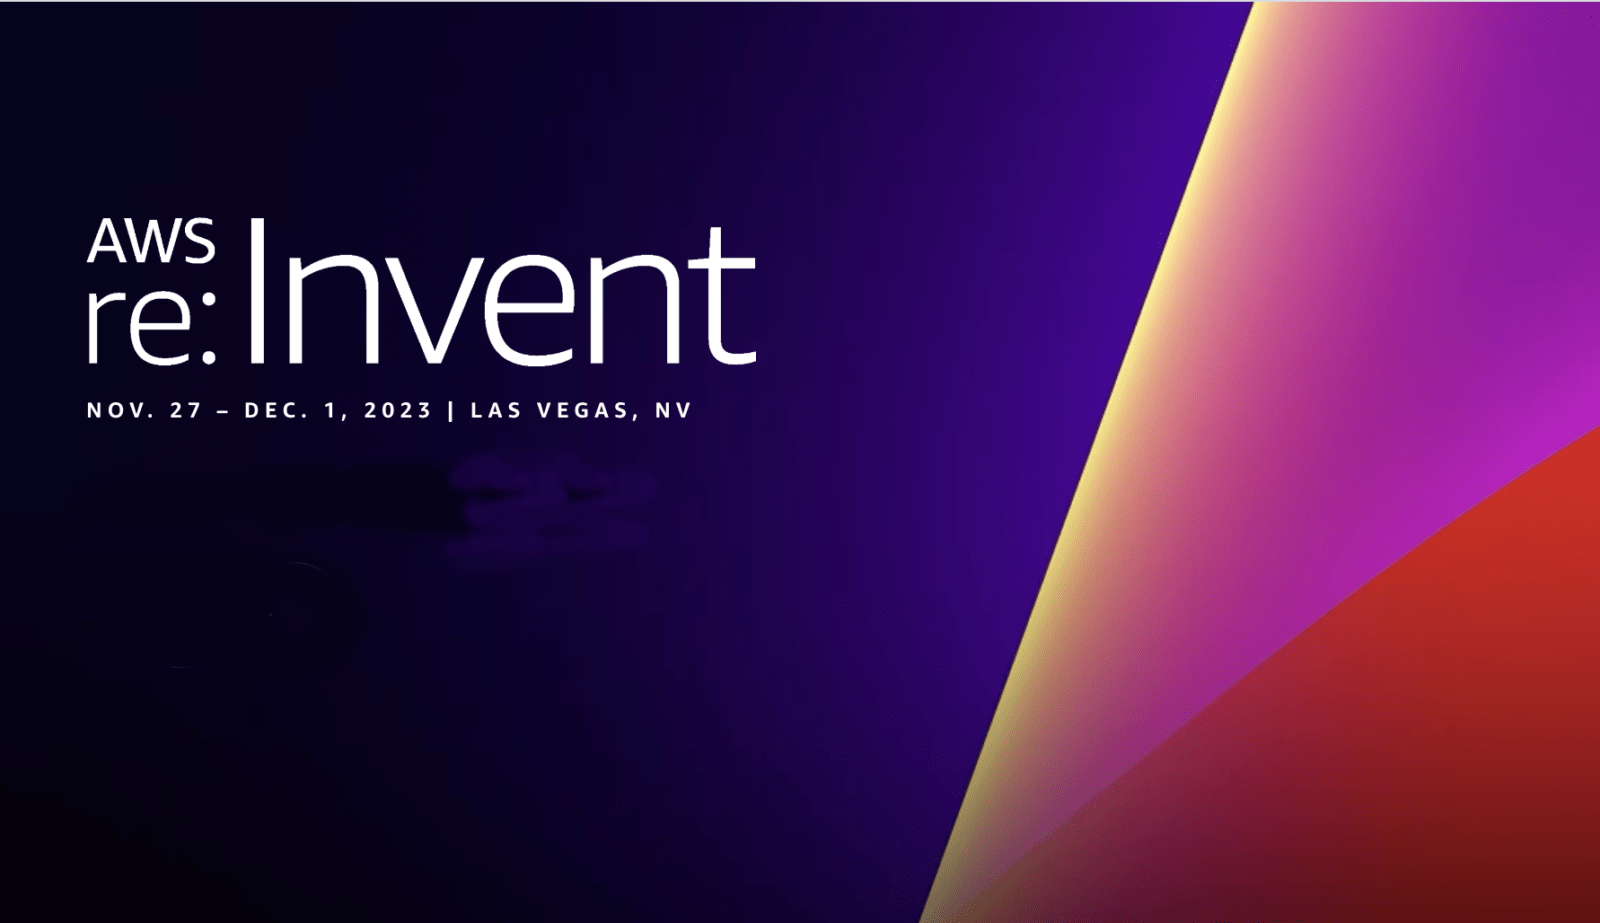 AWS re:Invent - November 27-30, 2023